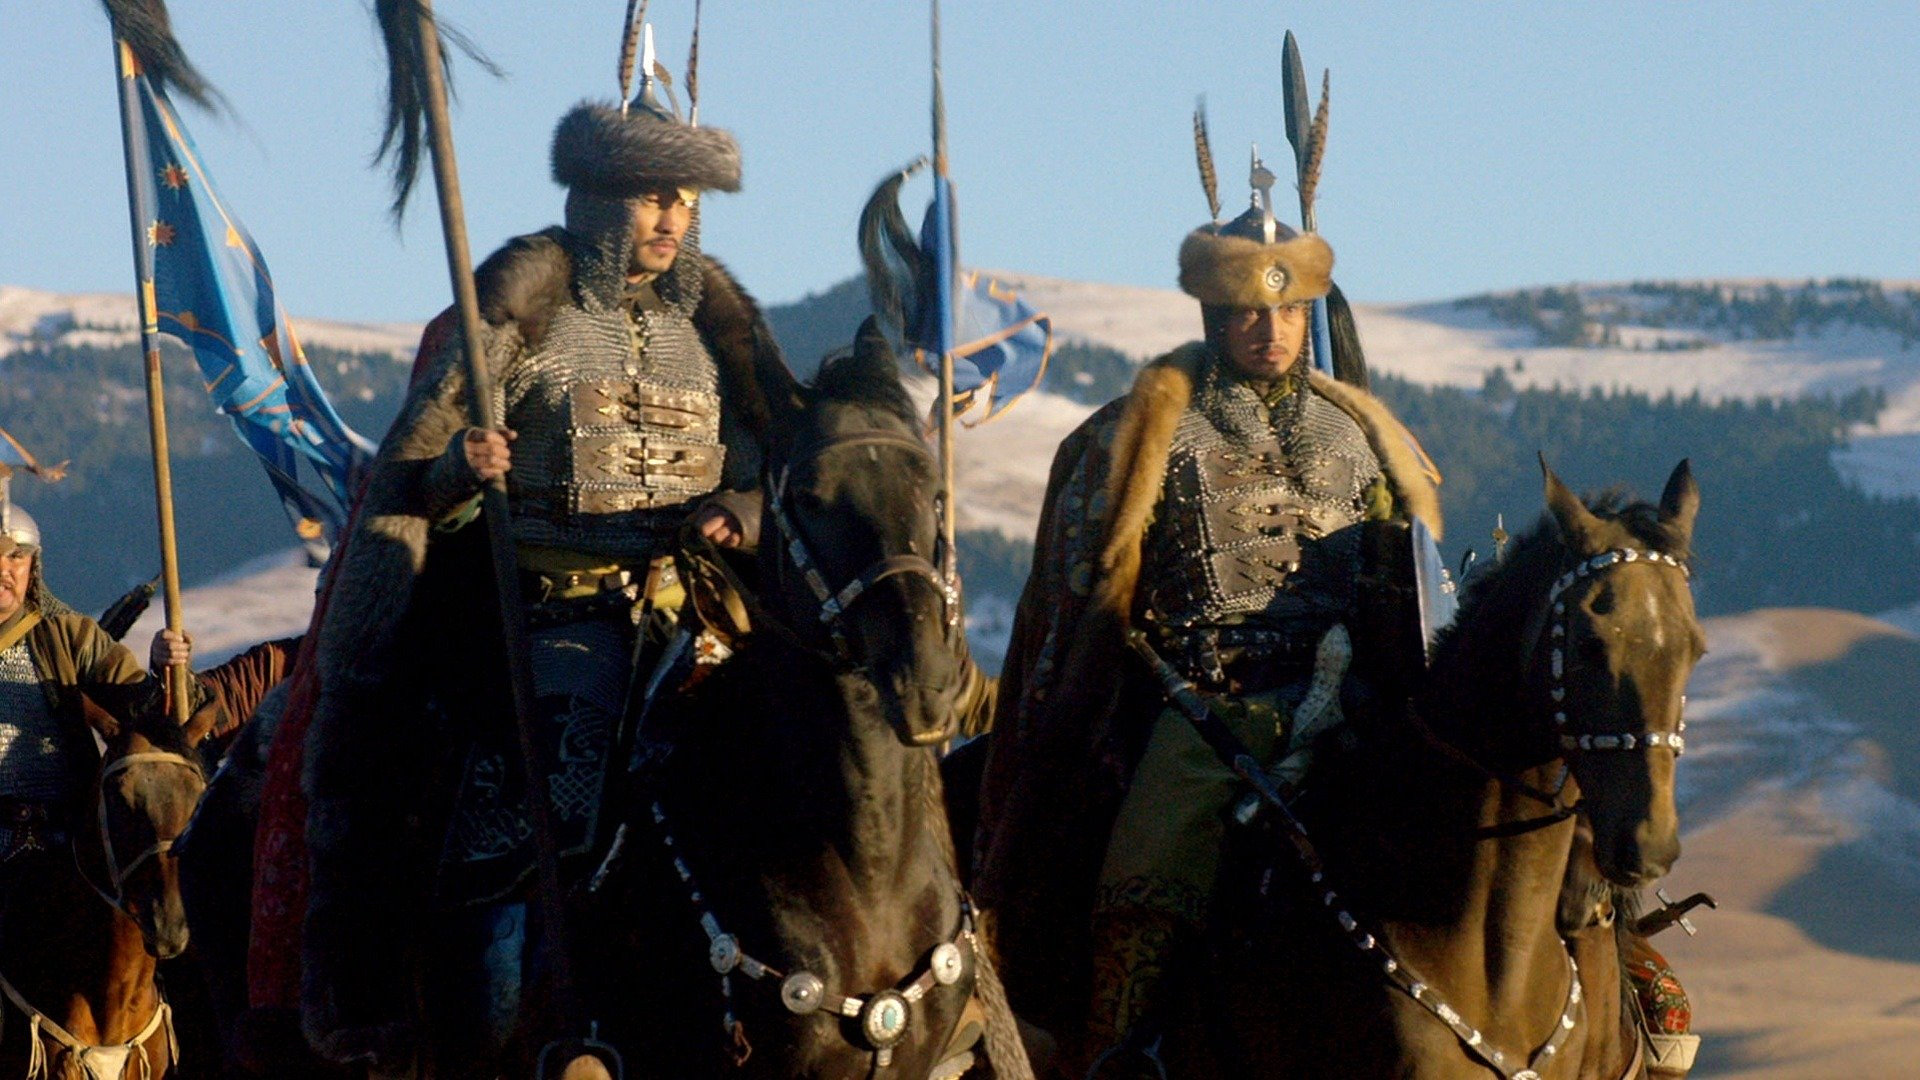 Kazakh Khanate - Golden Throne